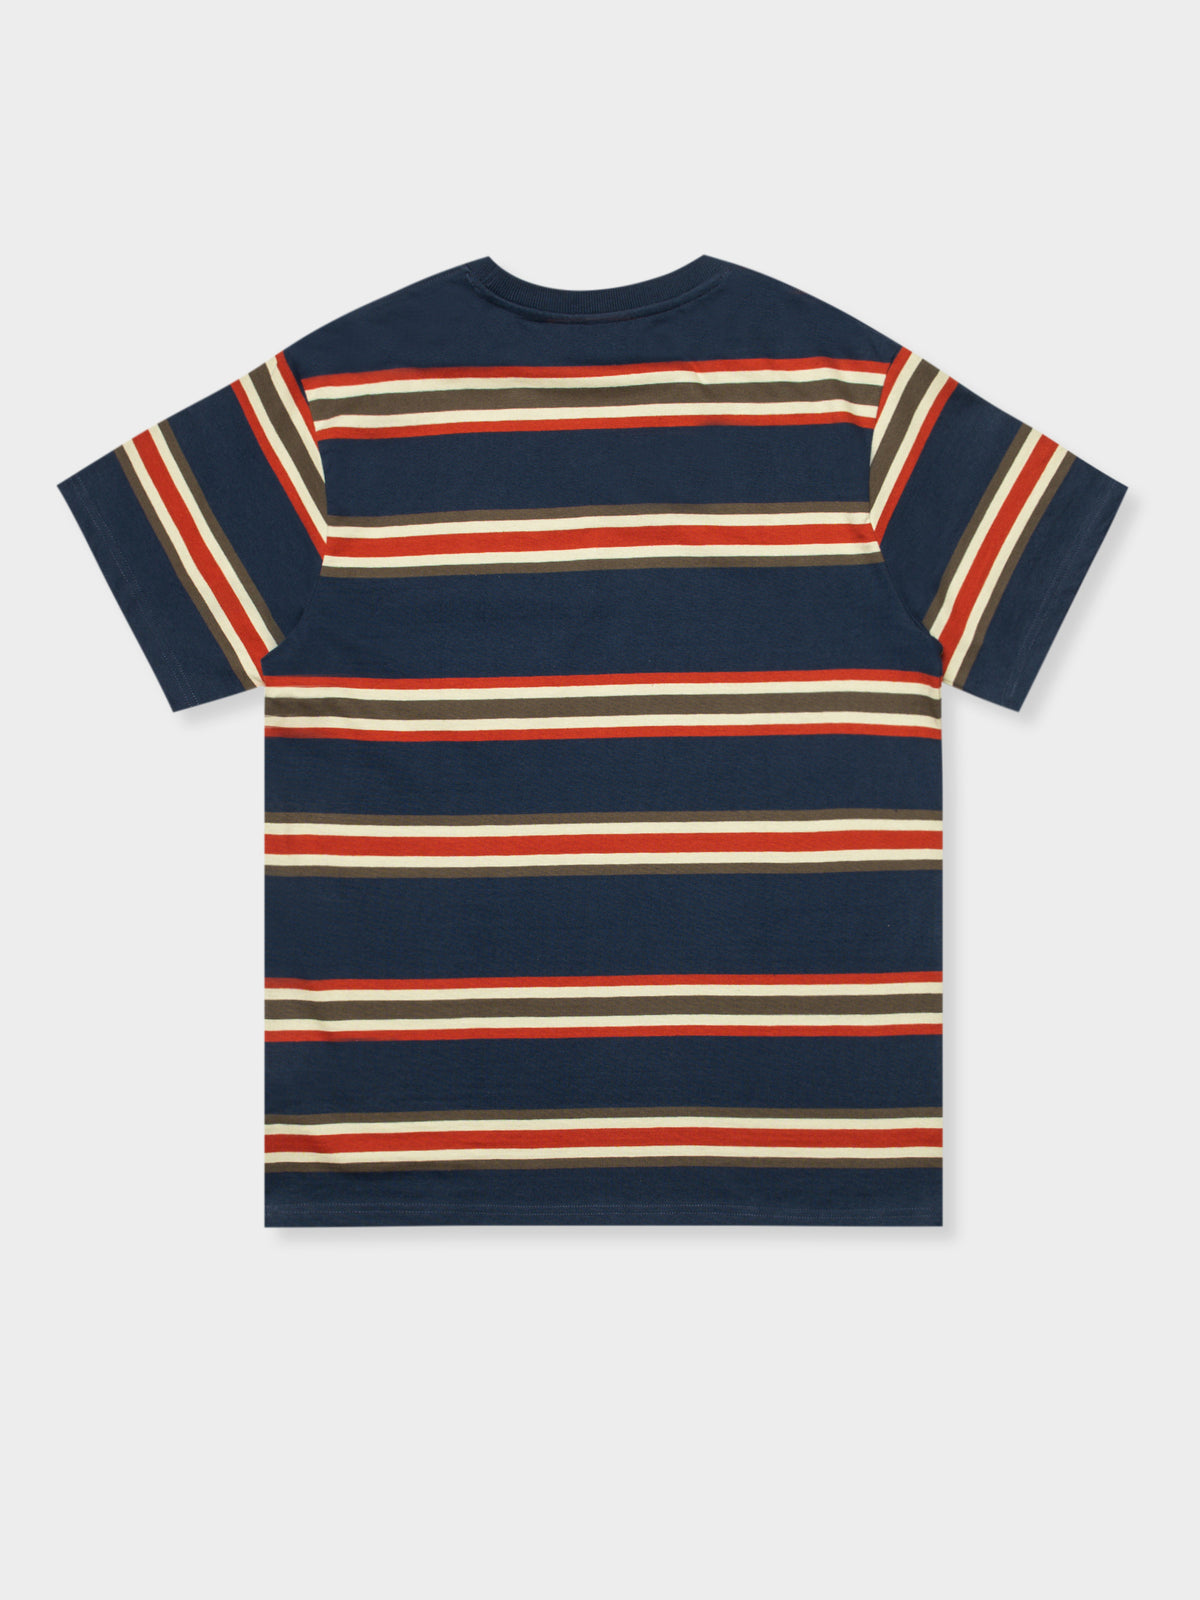 Palooza Pocket T-Shirt in Navy Stripe